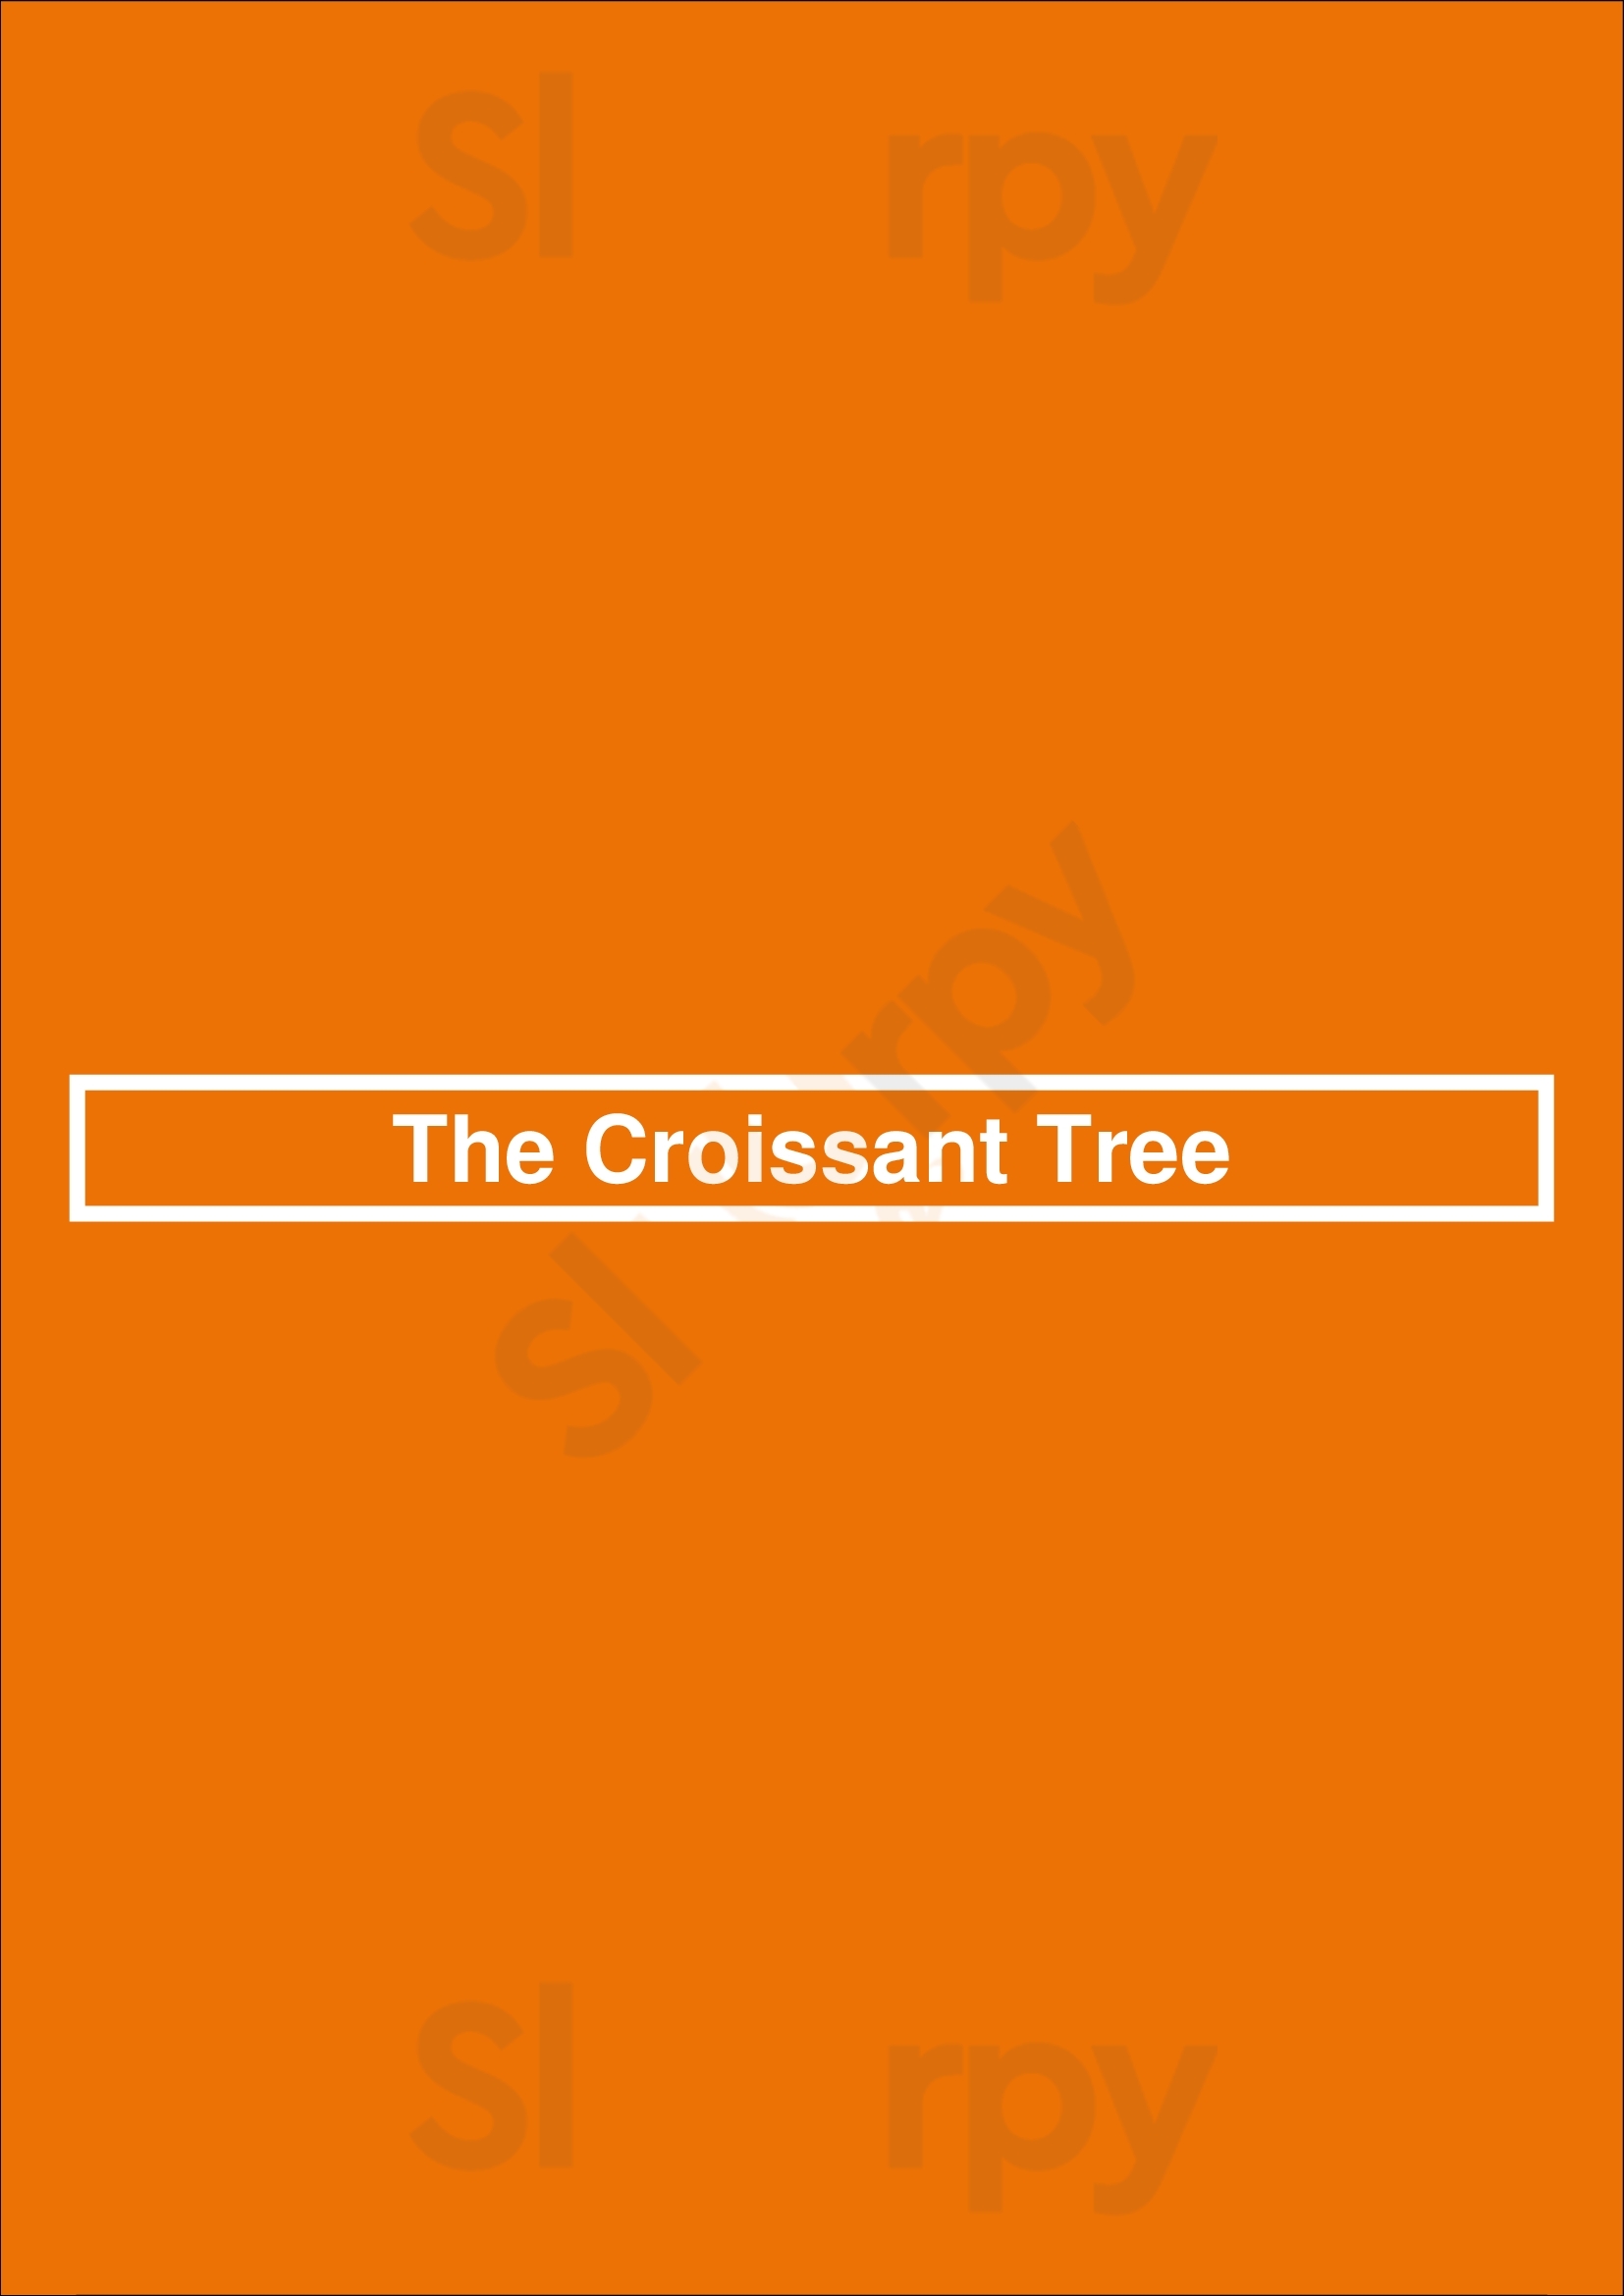 The Croissant Tree Toronto Menu - 1